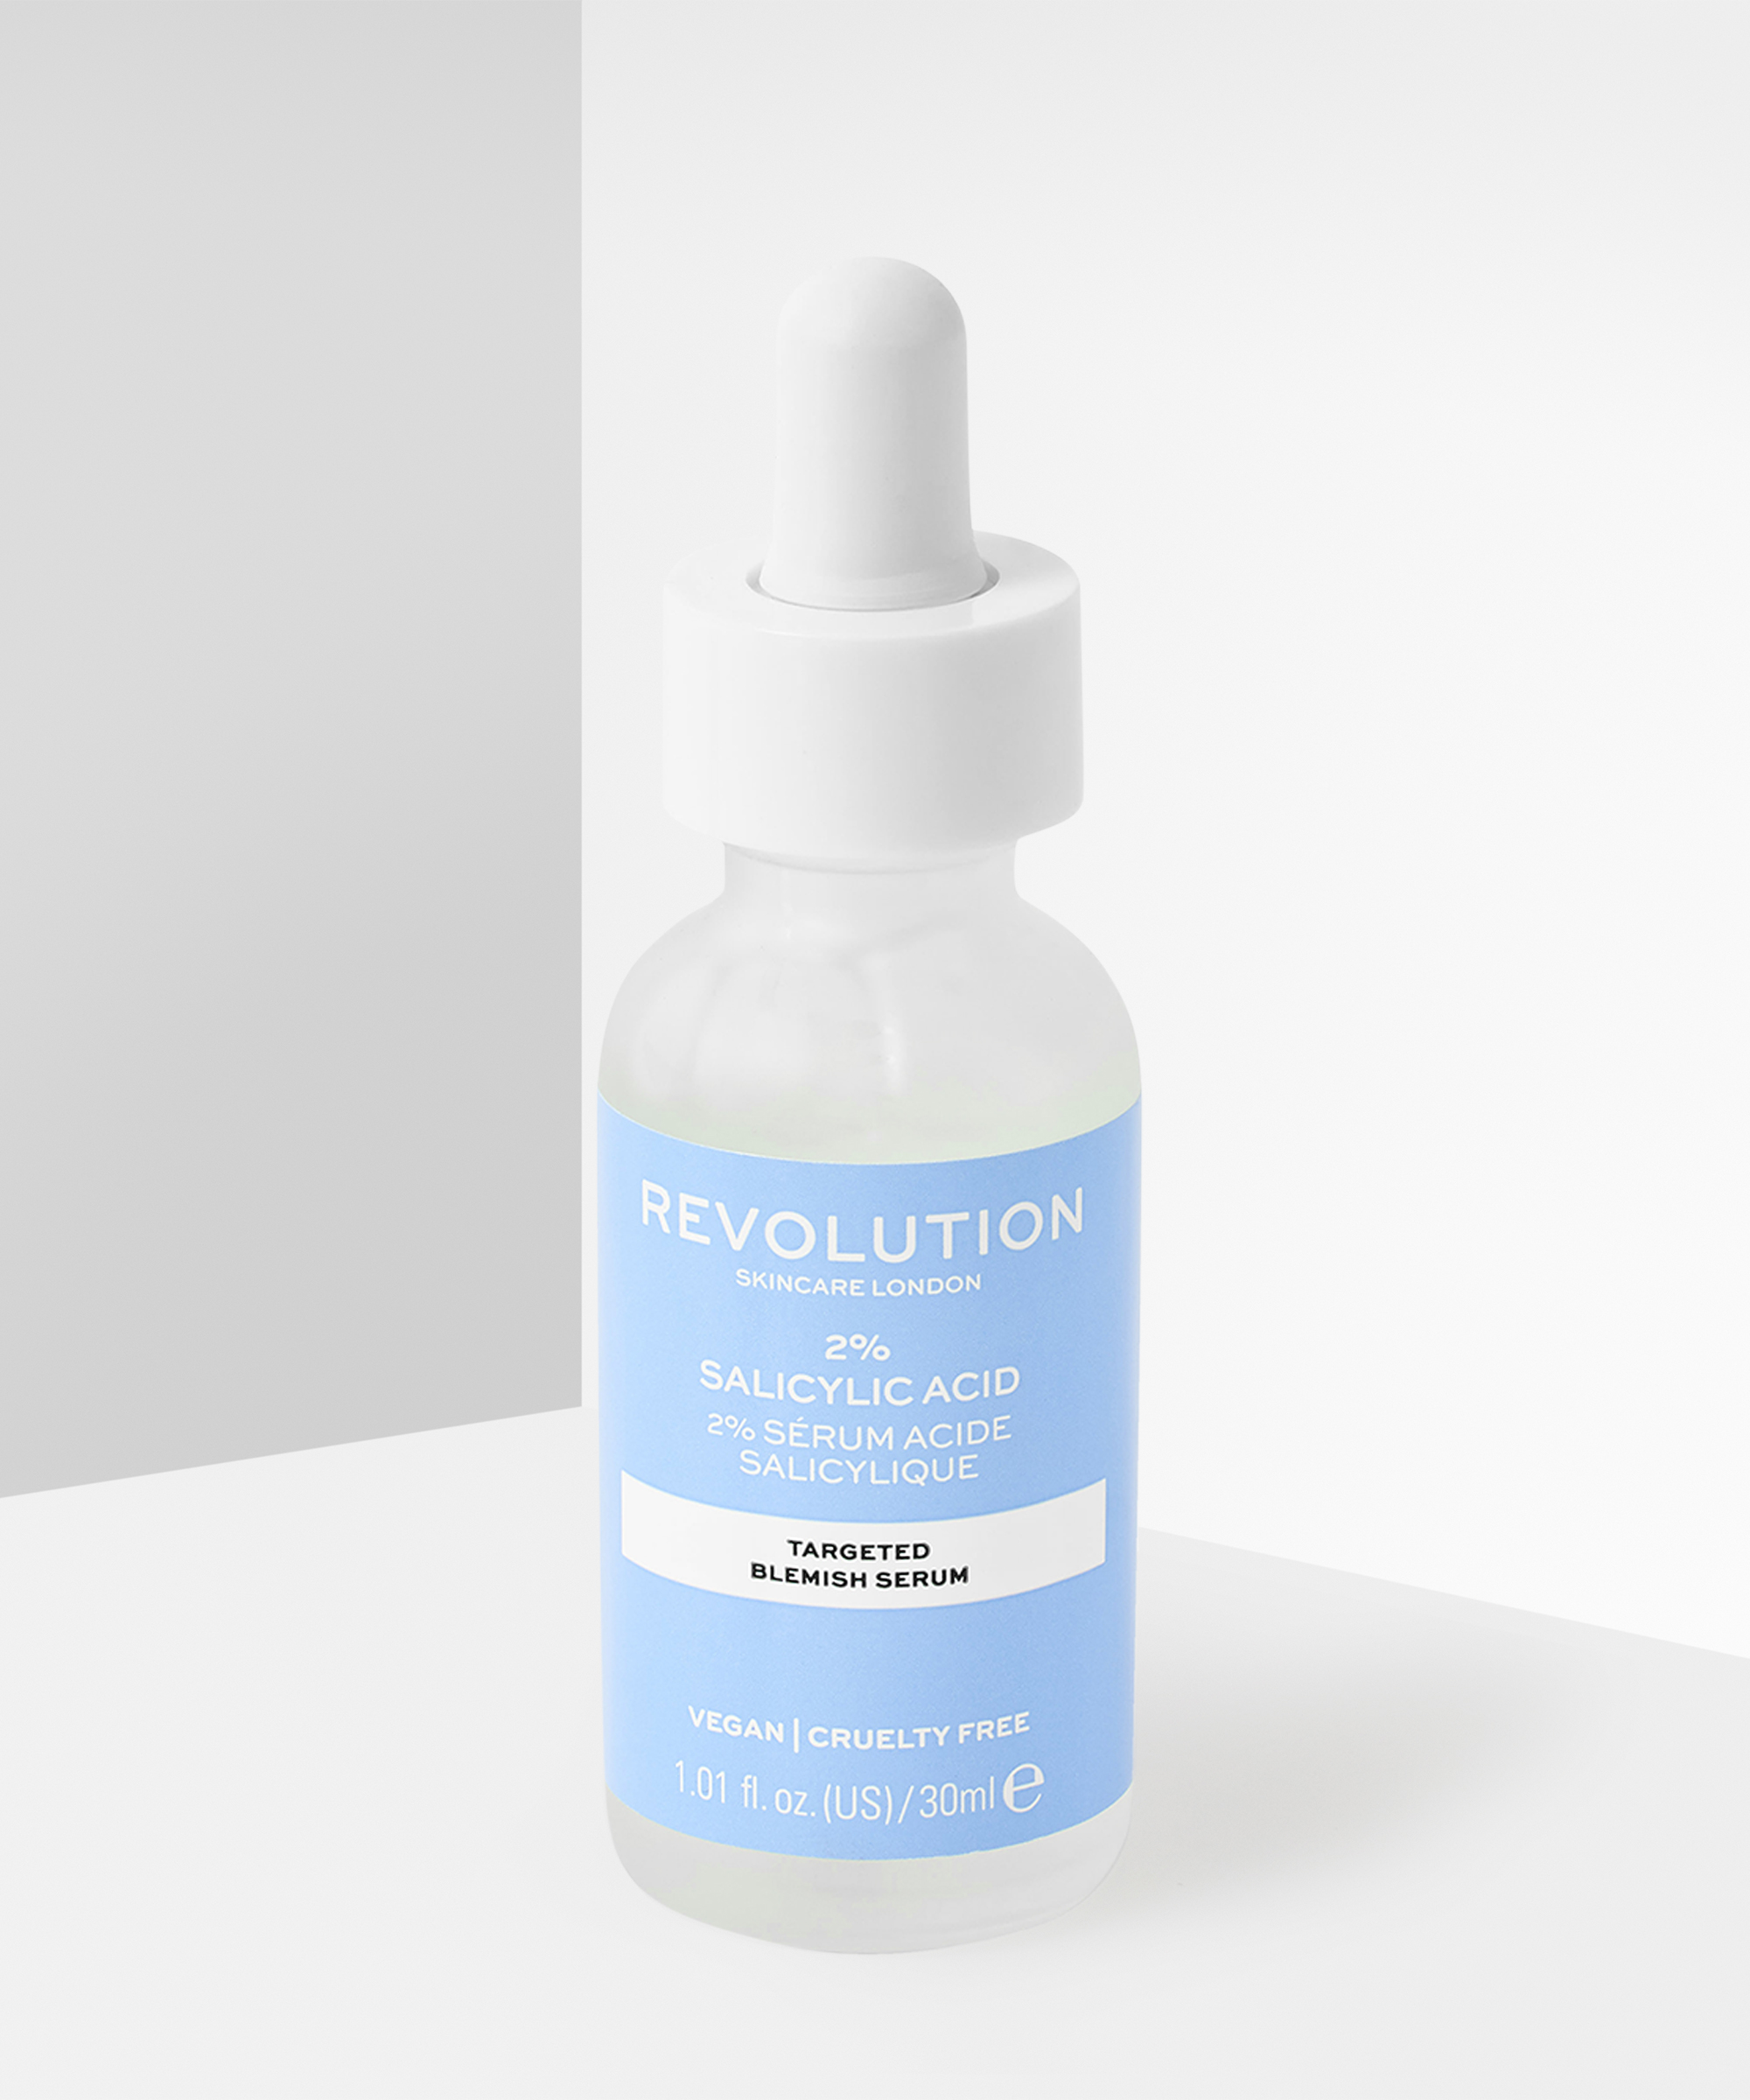 Revolution Skincare Targeted Blemish Serum 2 Salicylic Acid At Beauty Bay